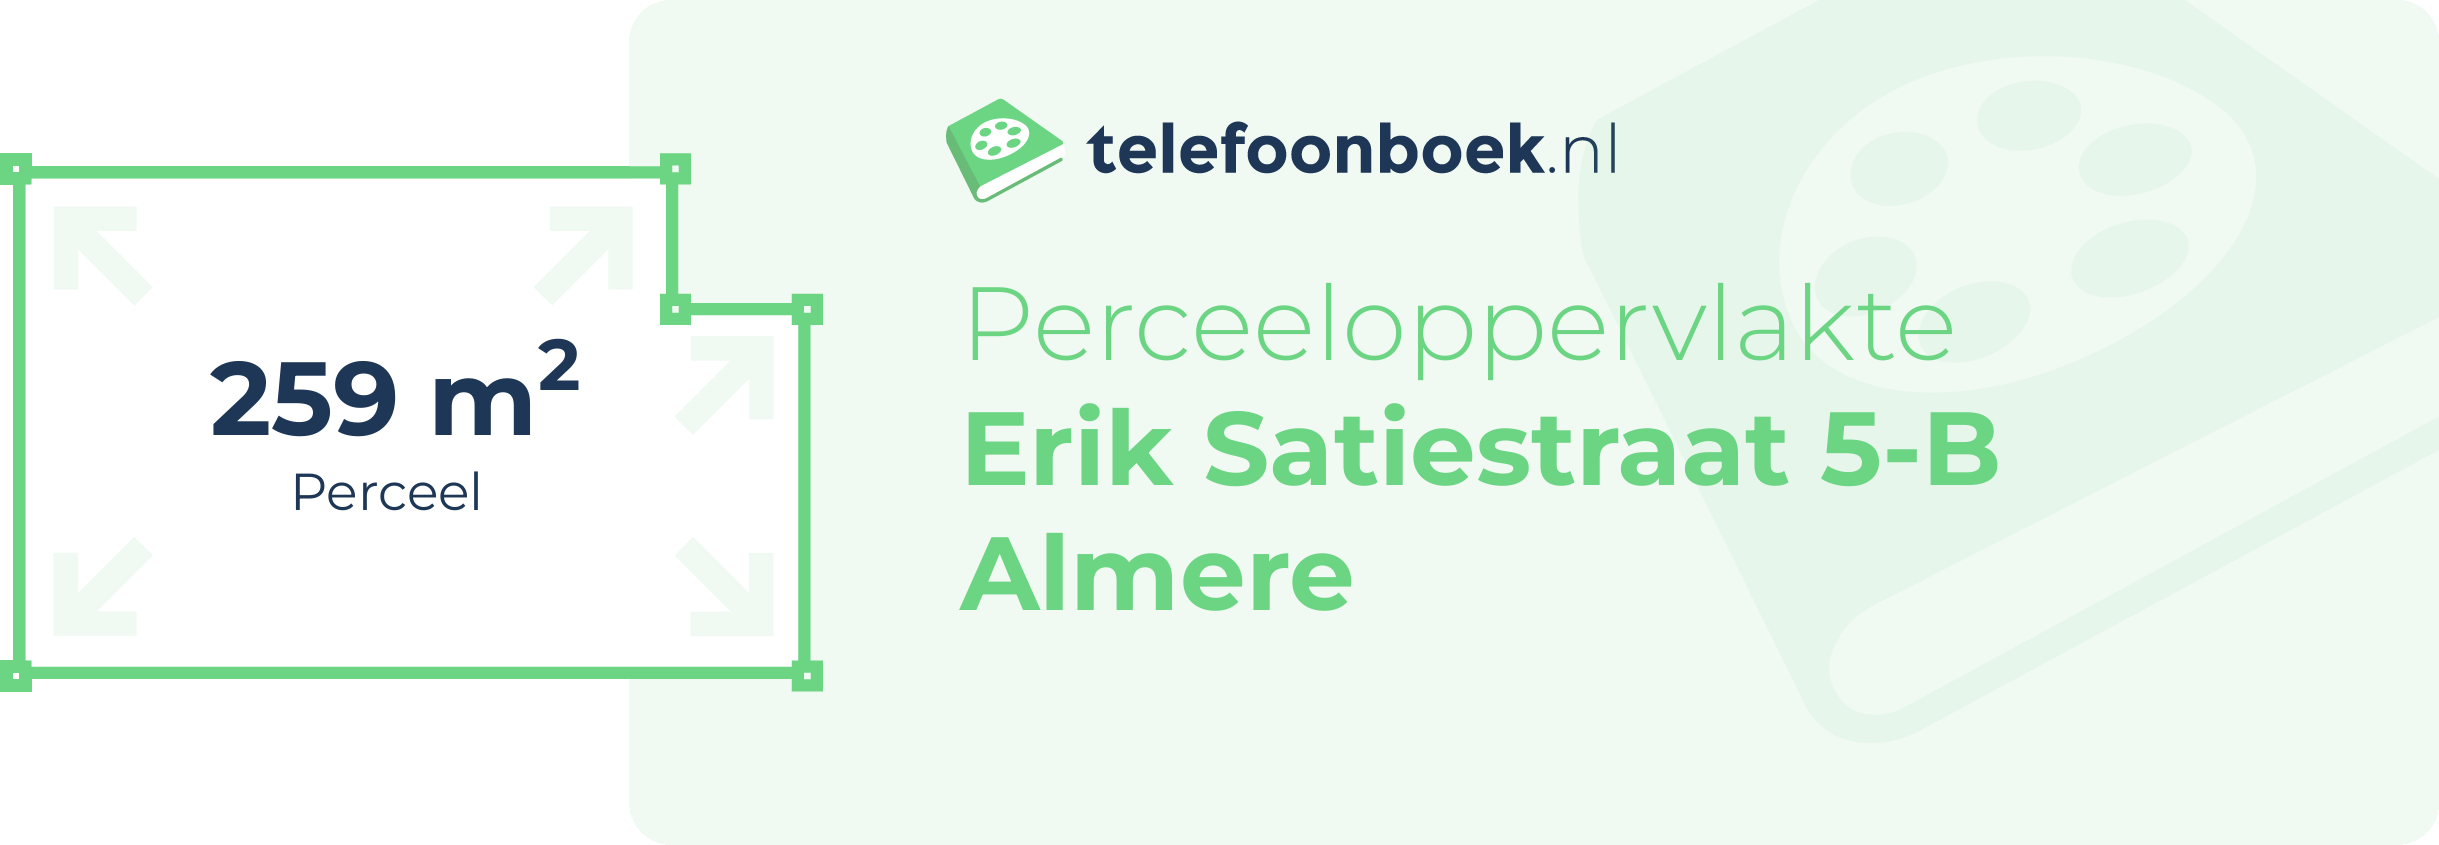 Perceeloppervlakte Erik Satiestraat 5-B Almere